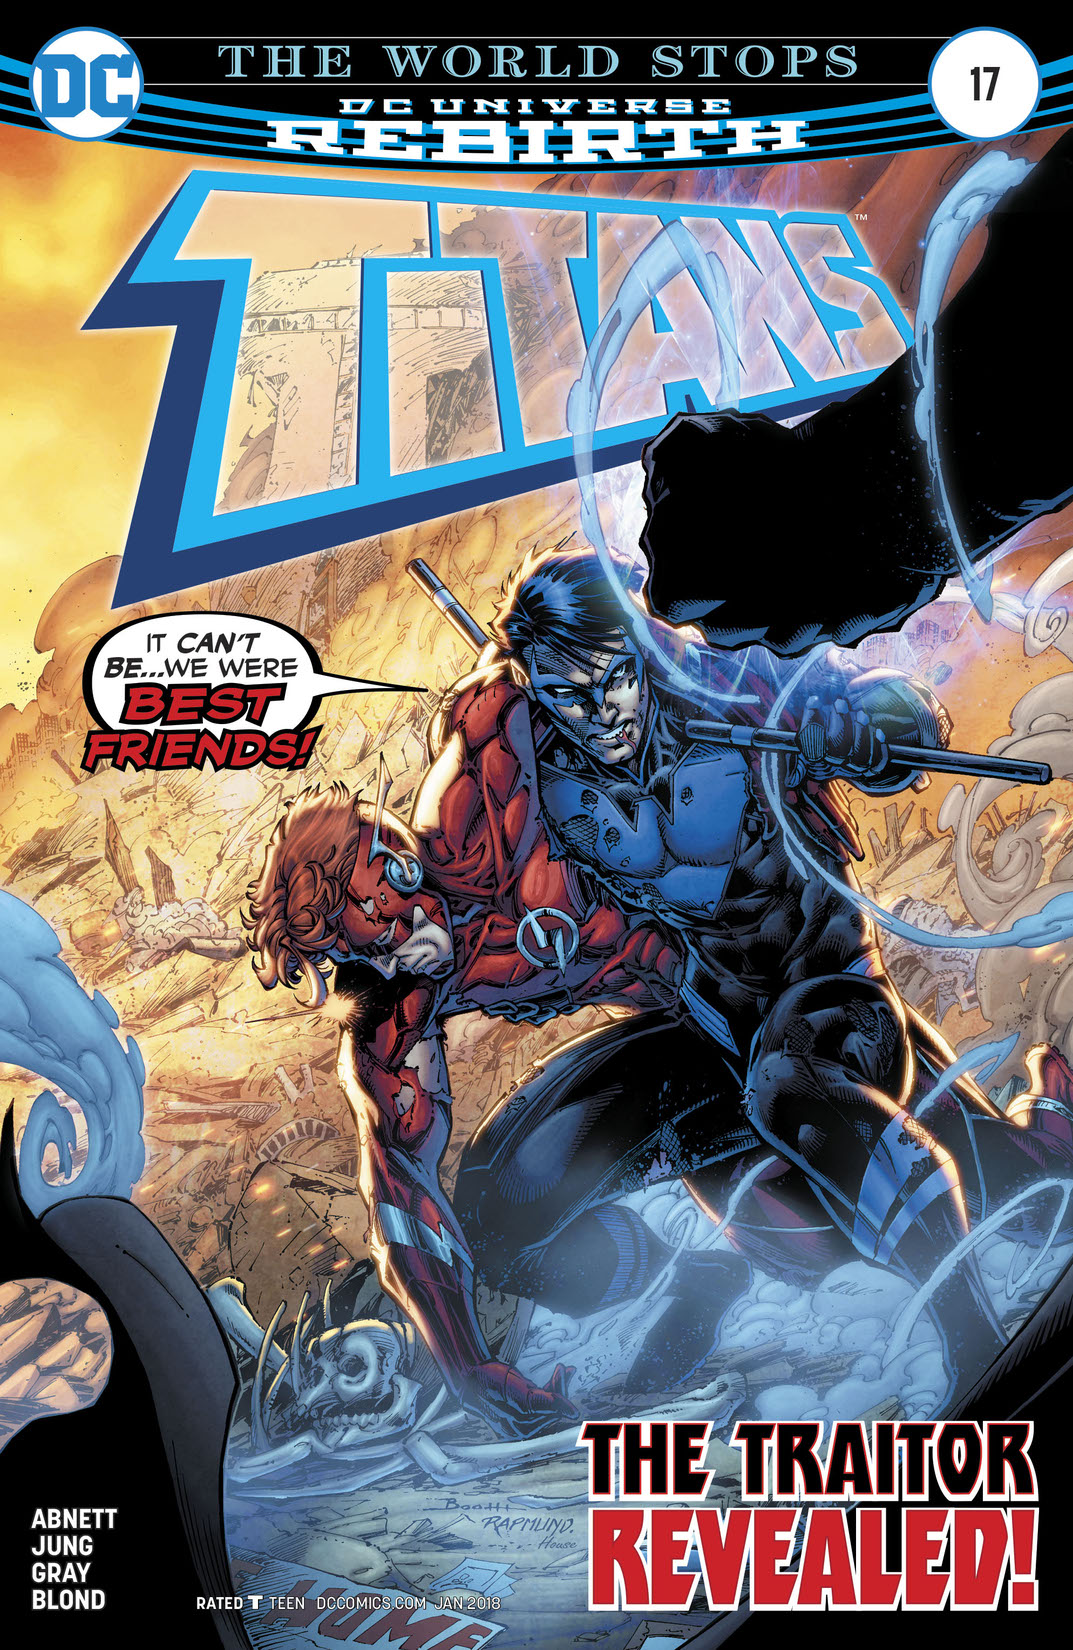 Titans (2016-) #17 preview images